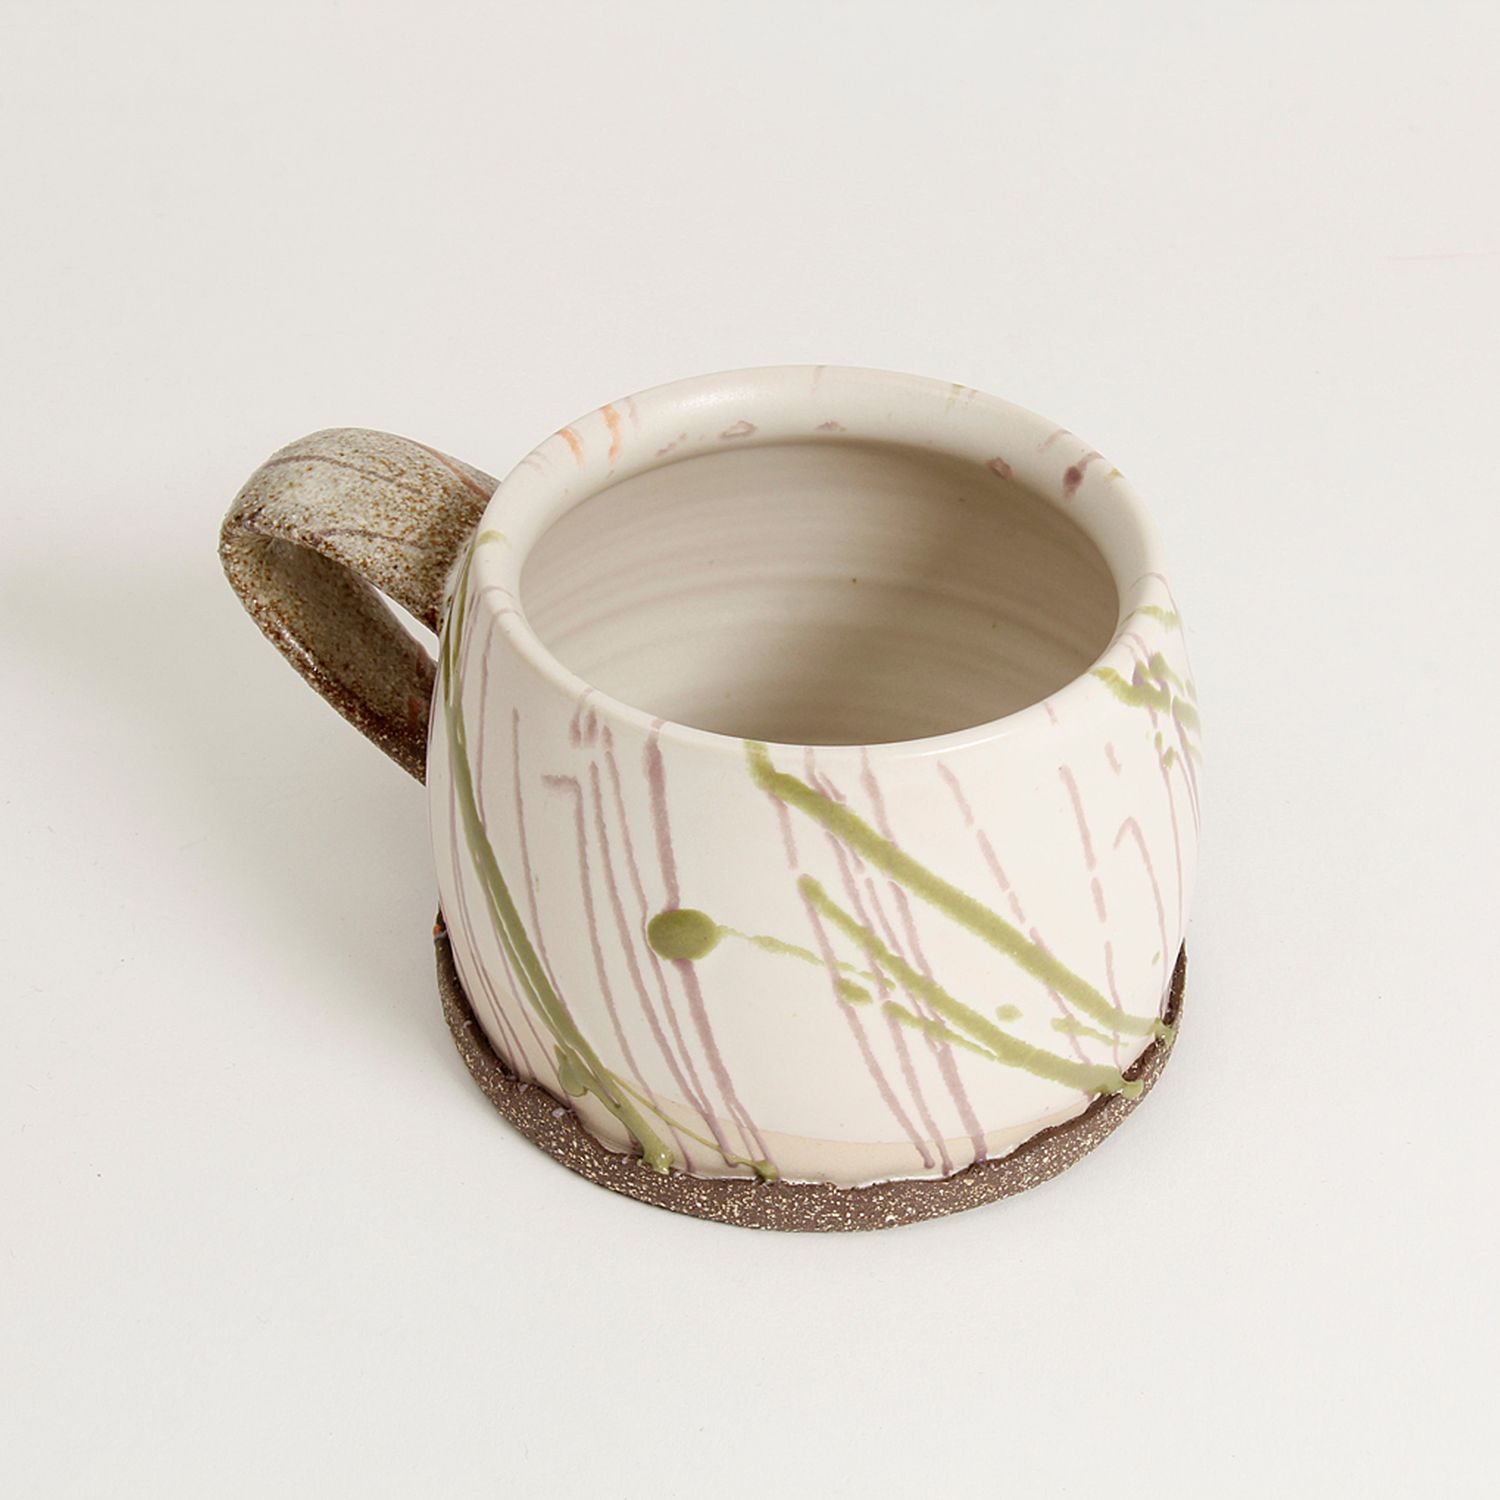 Gracia Isabel Gomez: “Tealicious” White Chocolate Mug with Colours Product Image 7 of 7